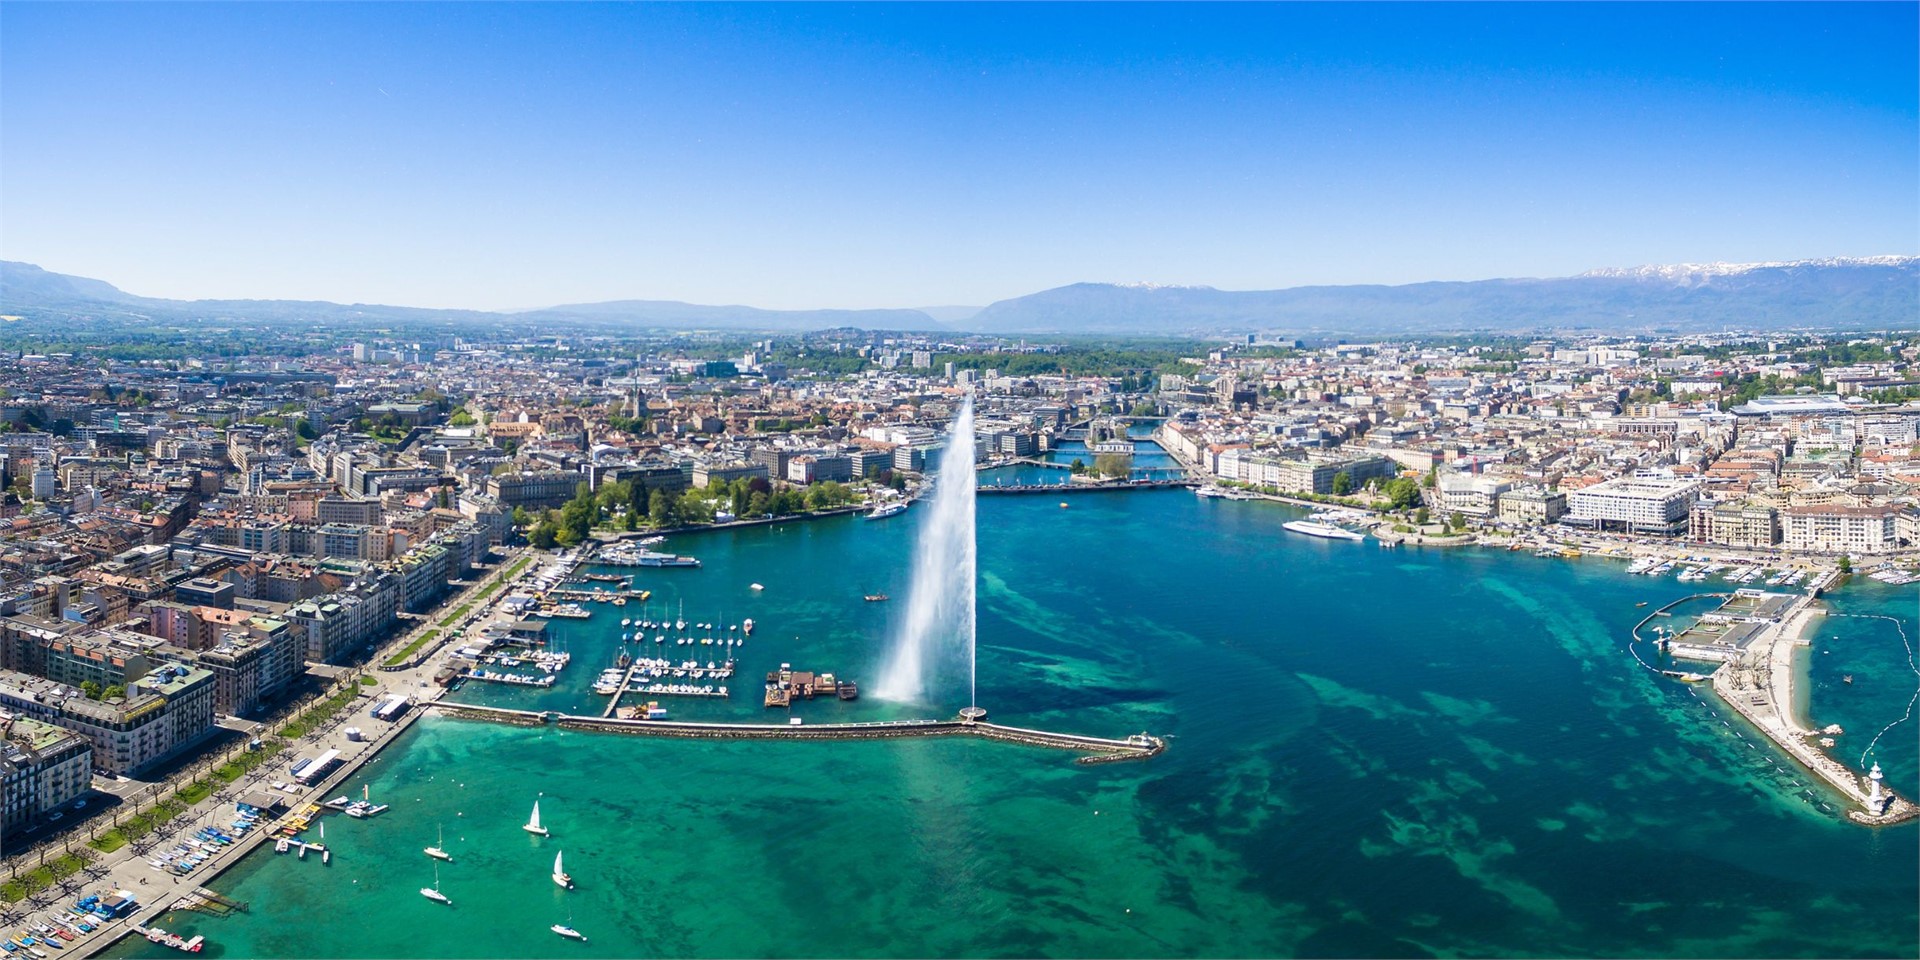 Hotels and accommodation in Geneva, Switzerland